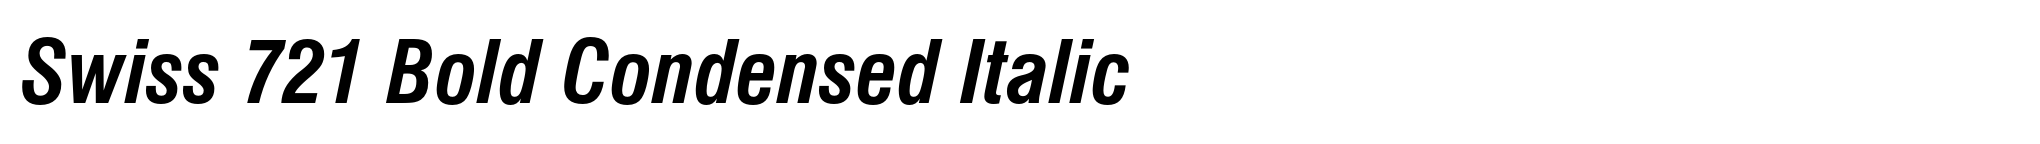 Swiss 721 Bold Condensed Italic image